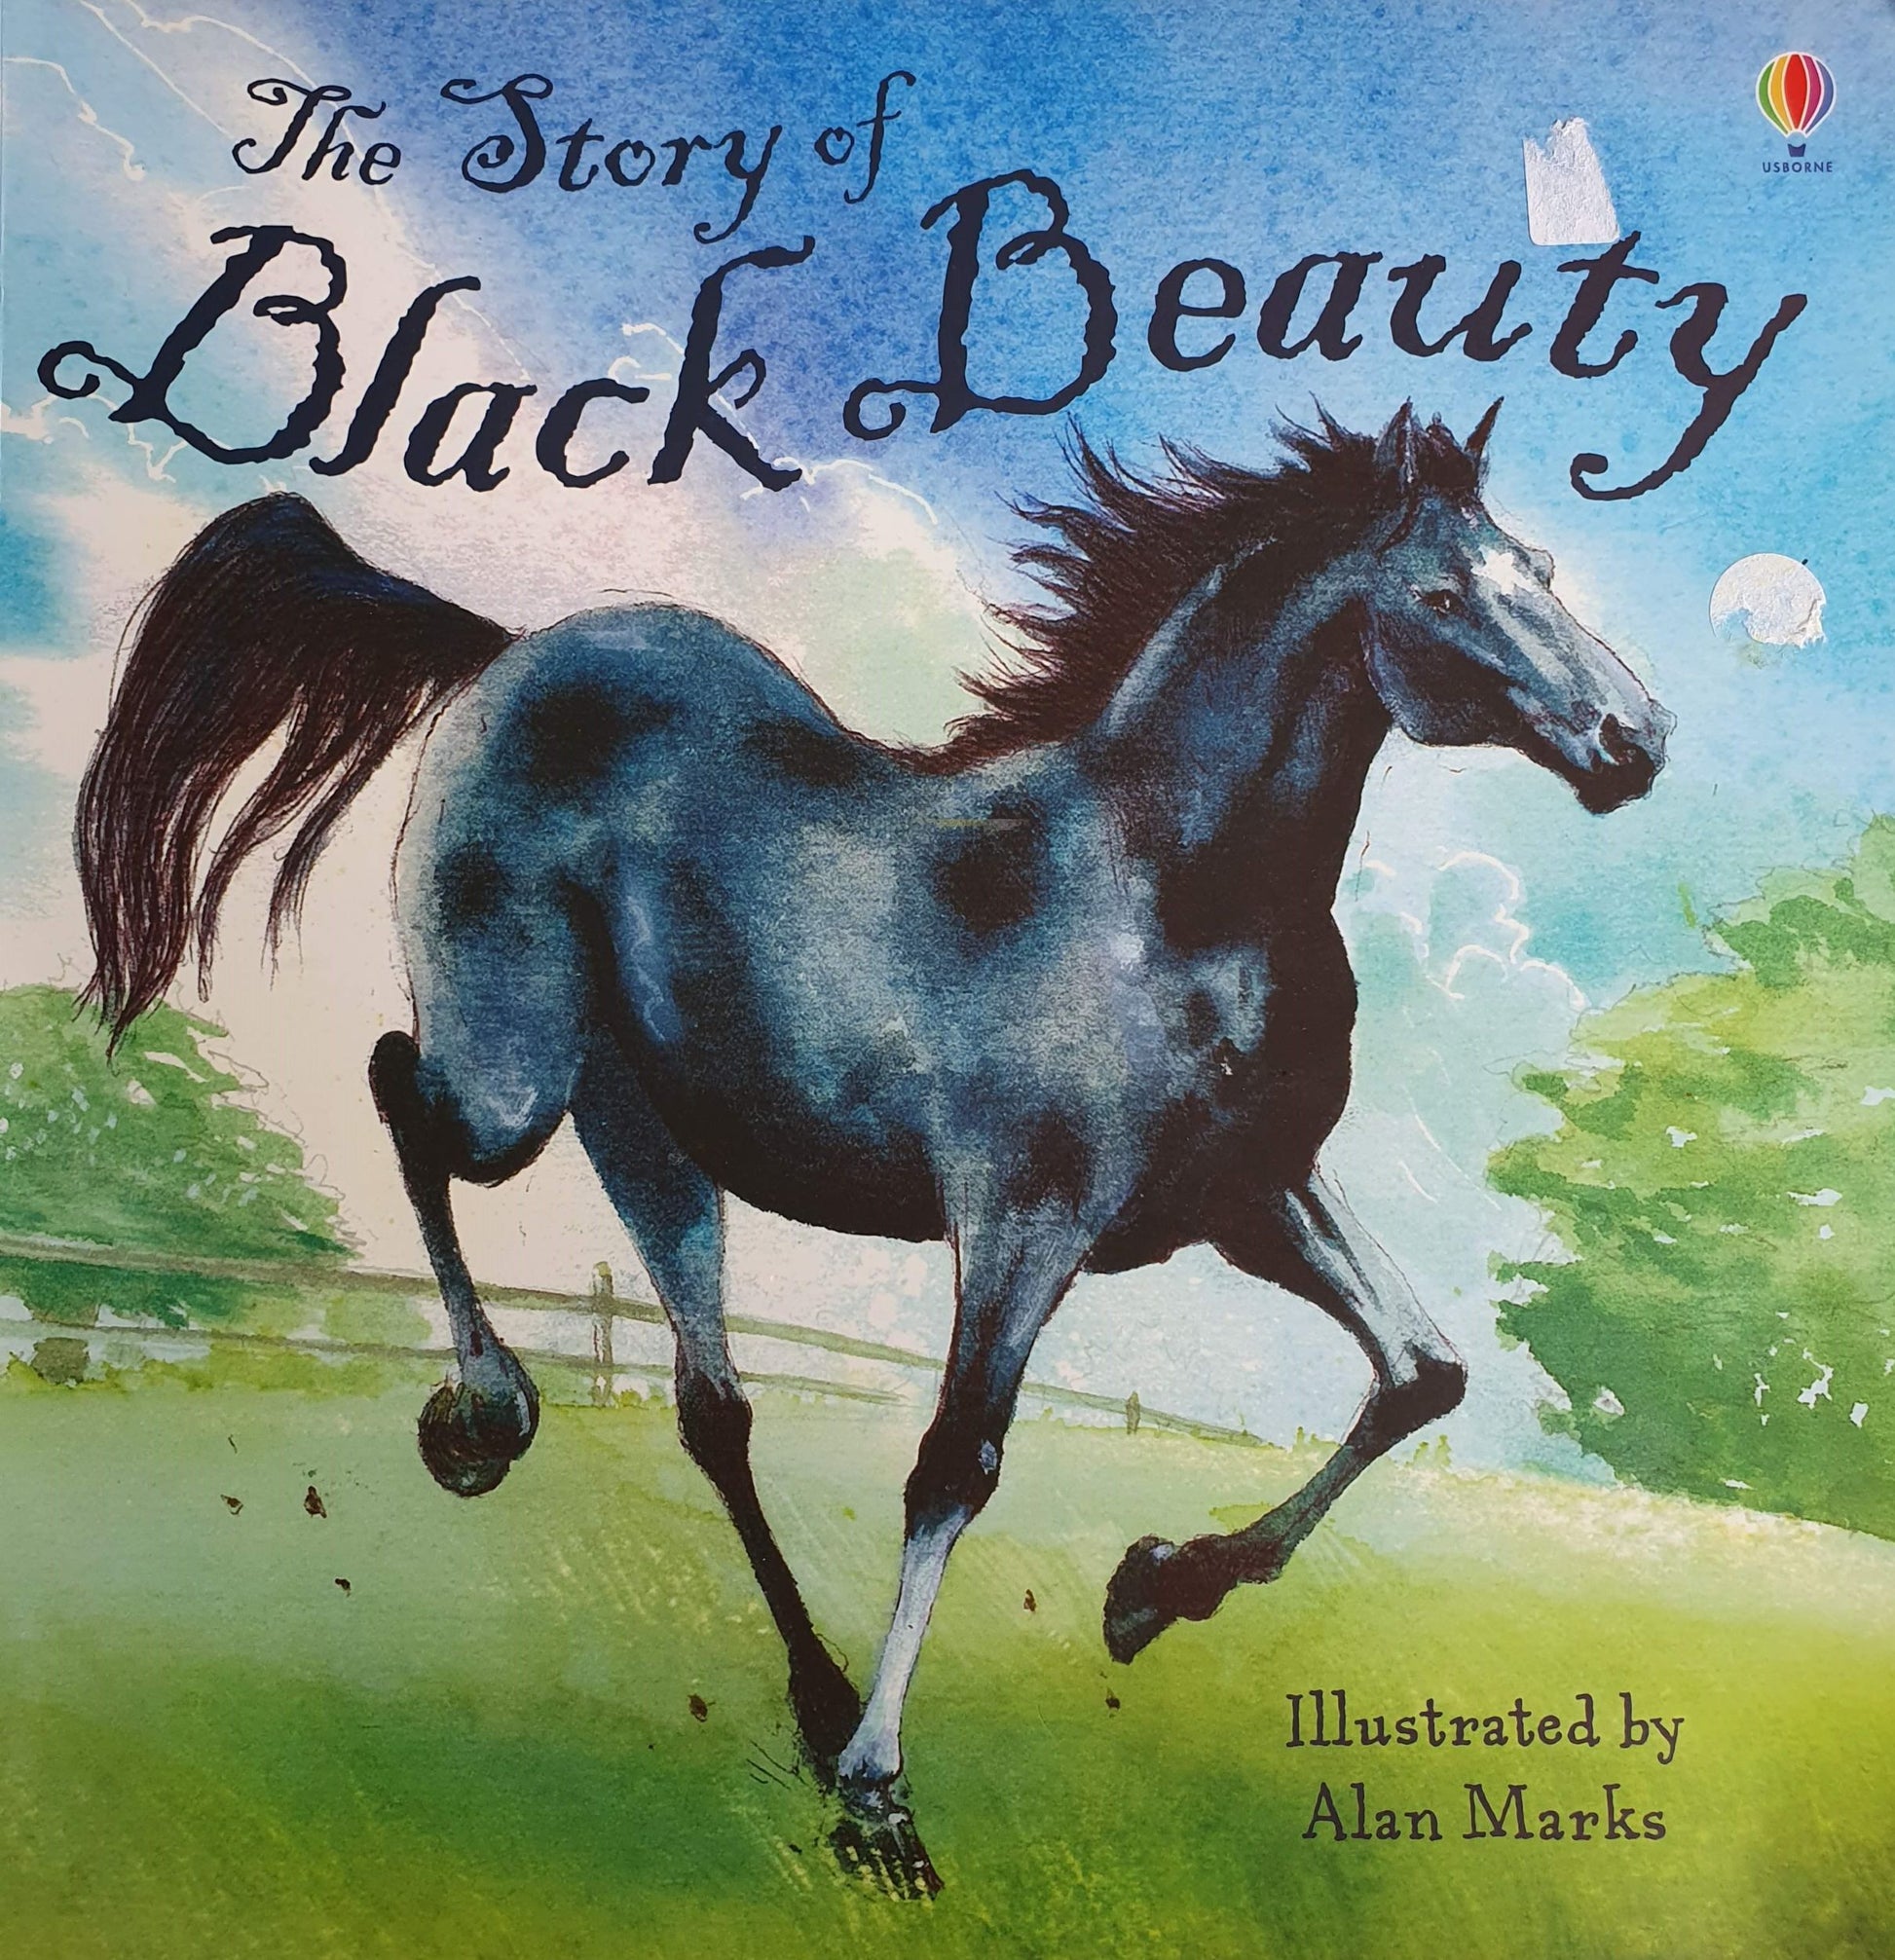 The story of black beauty Like New Classics  (4603217379383)